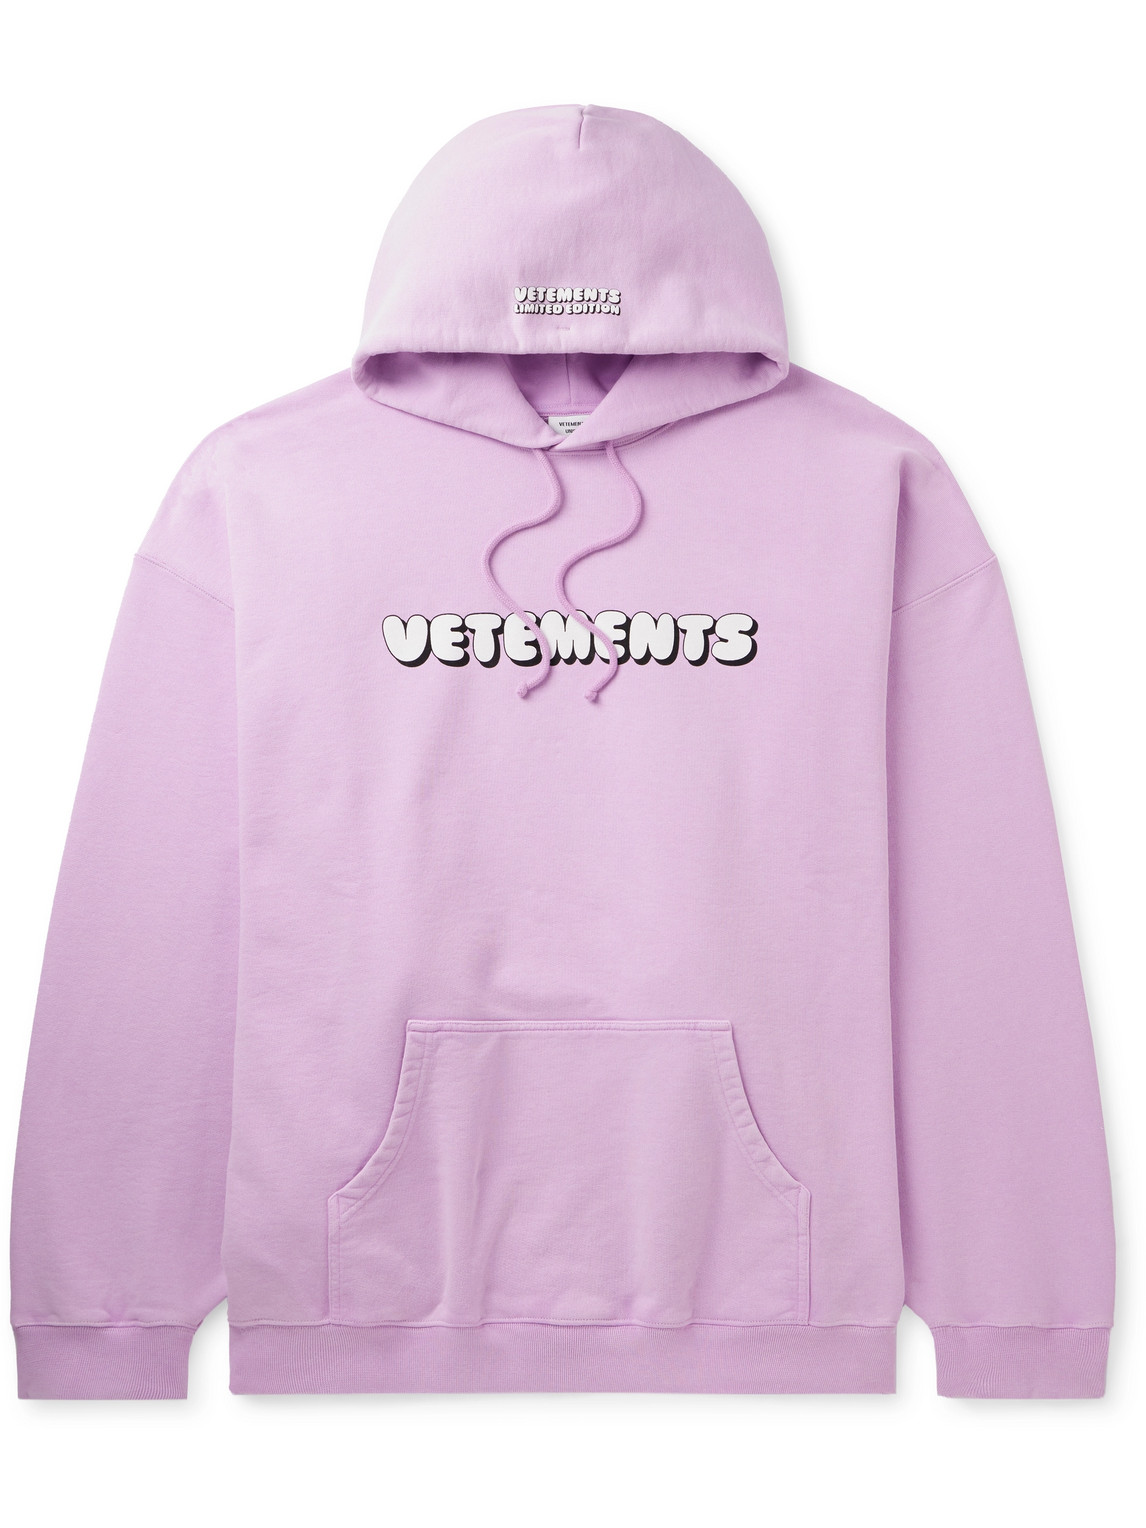 VETEMENTS - Logo-Print Cotton-Blend Jersey Hoodie - Men - Pink - XL von VETEMENTS